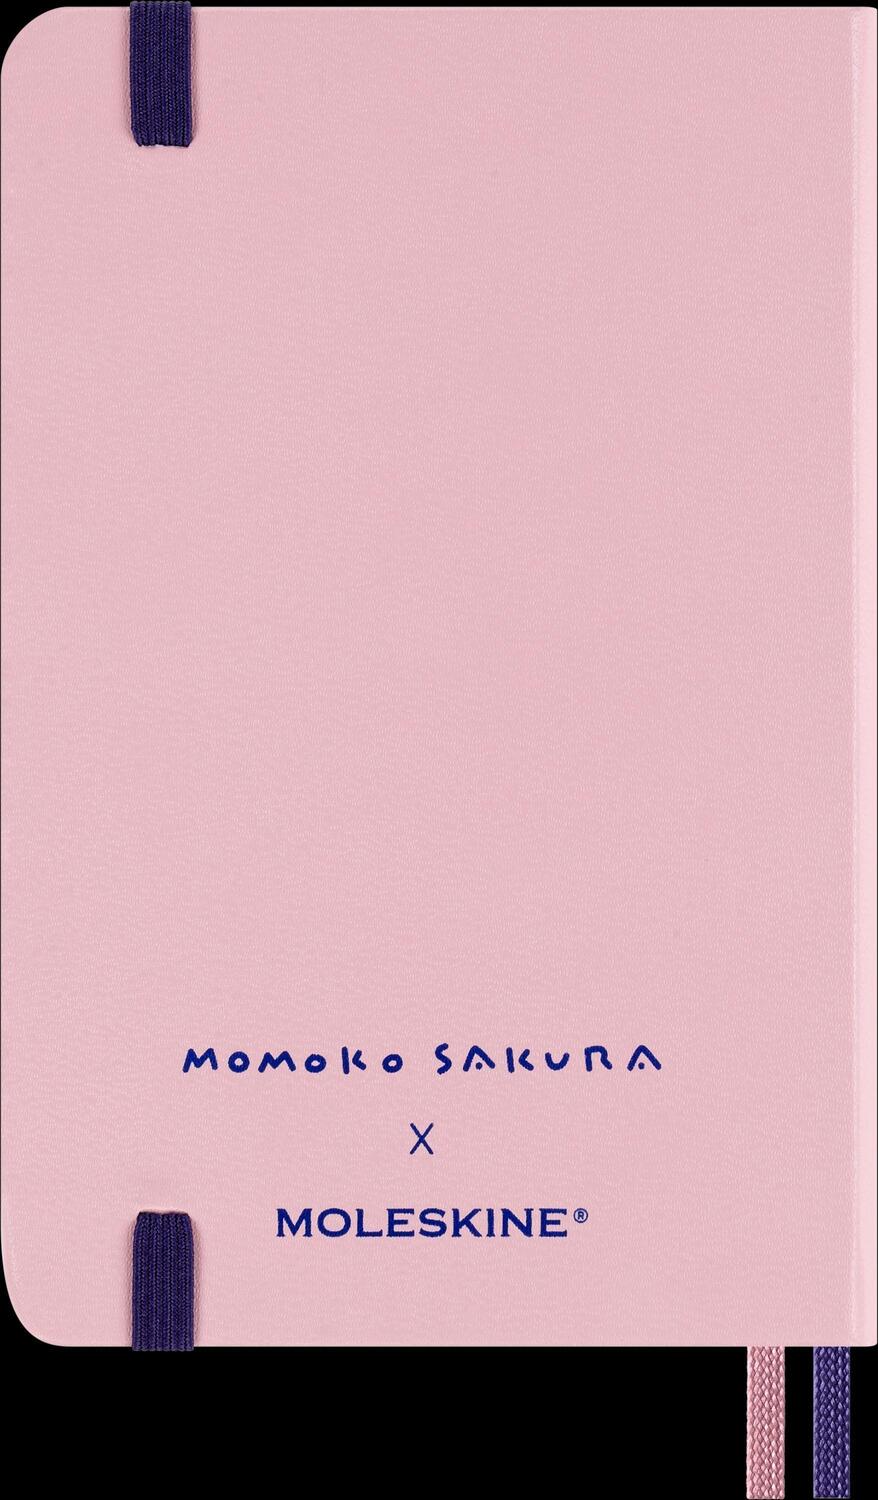 Bild: 8056999271640 | Moleskine Sakura Notizbuch, P/A6, Liniert, Fester Einband | Notizbuch